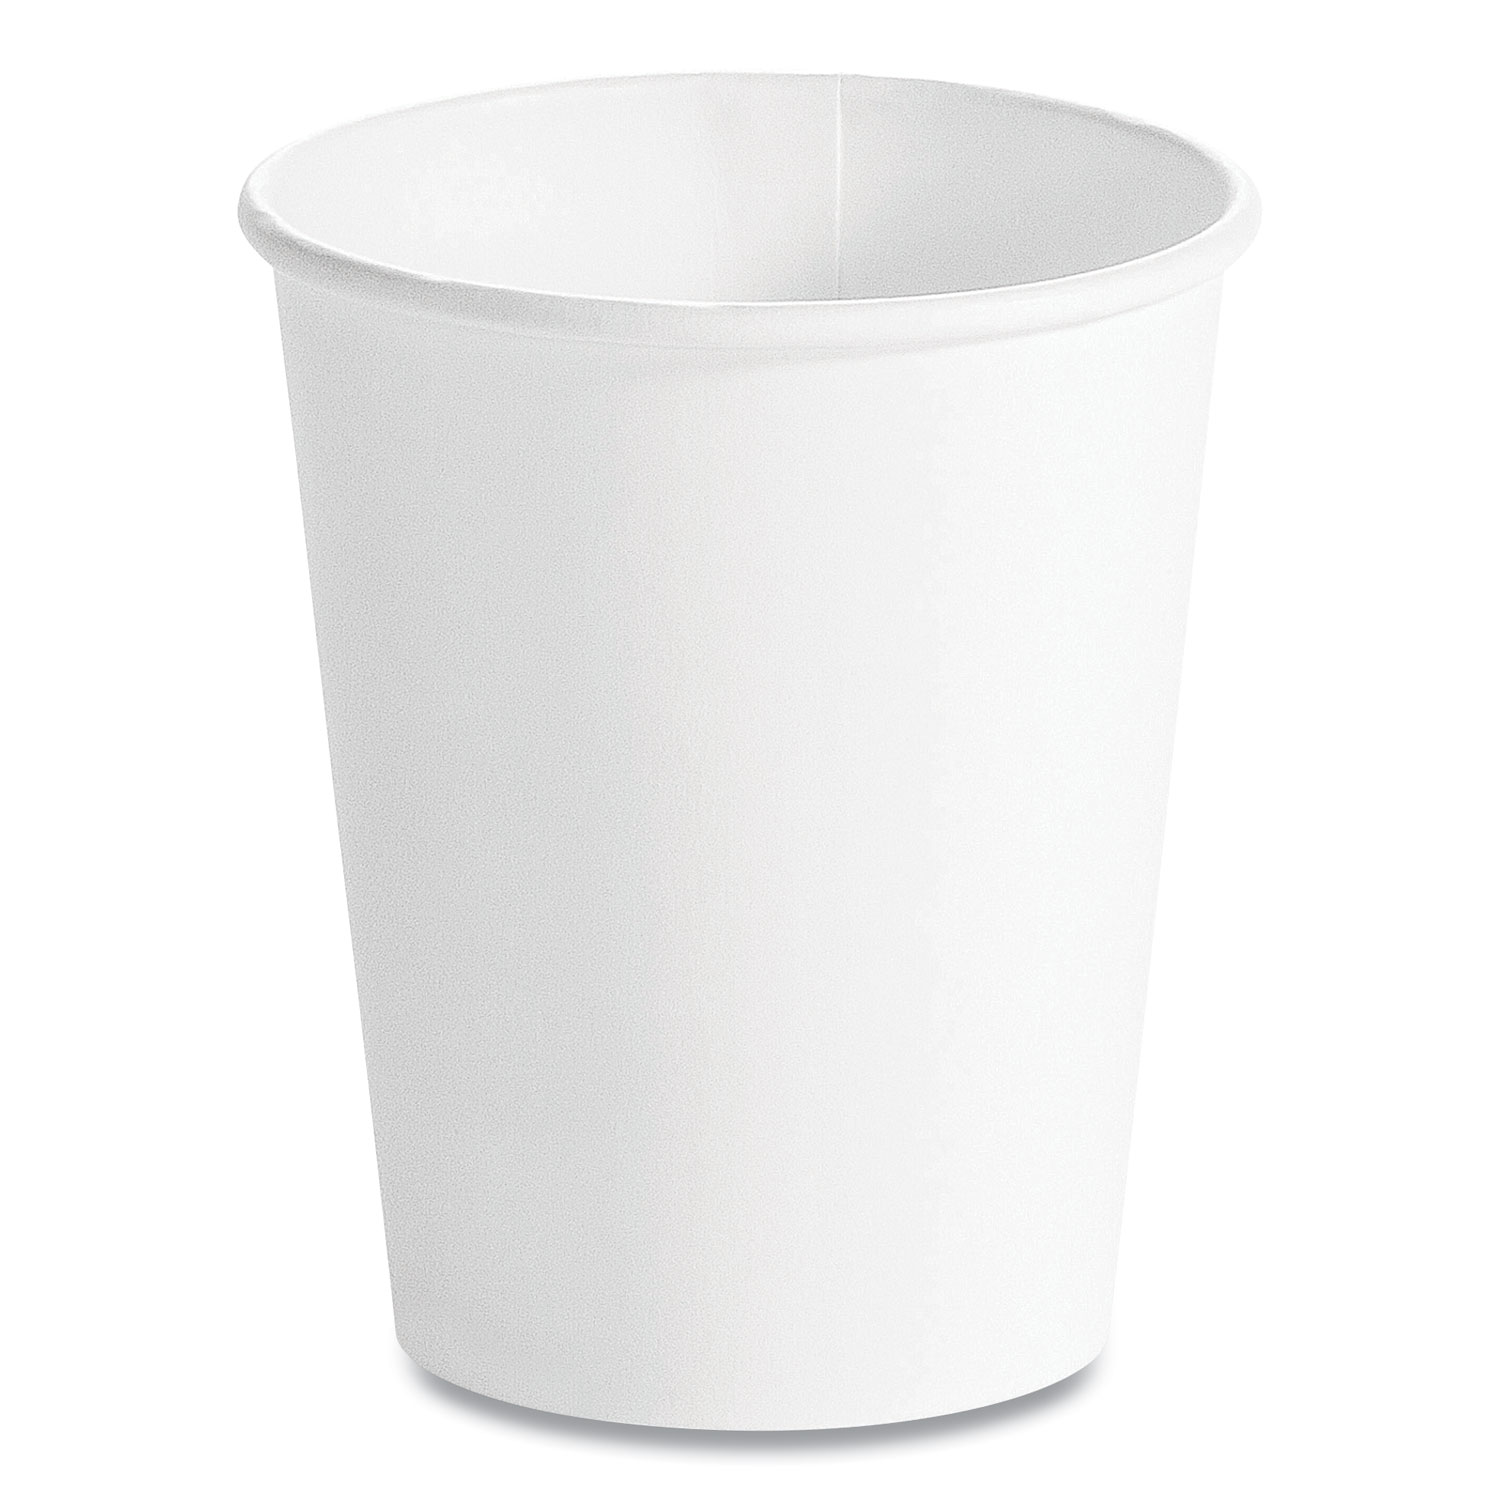  Huhtamaki 62903 Single Wall Hot Cups, 16 oz, White, 1,000/Carton (HUH62903) 